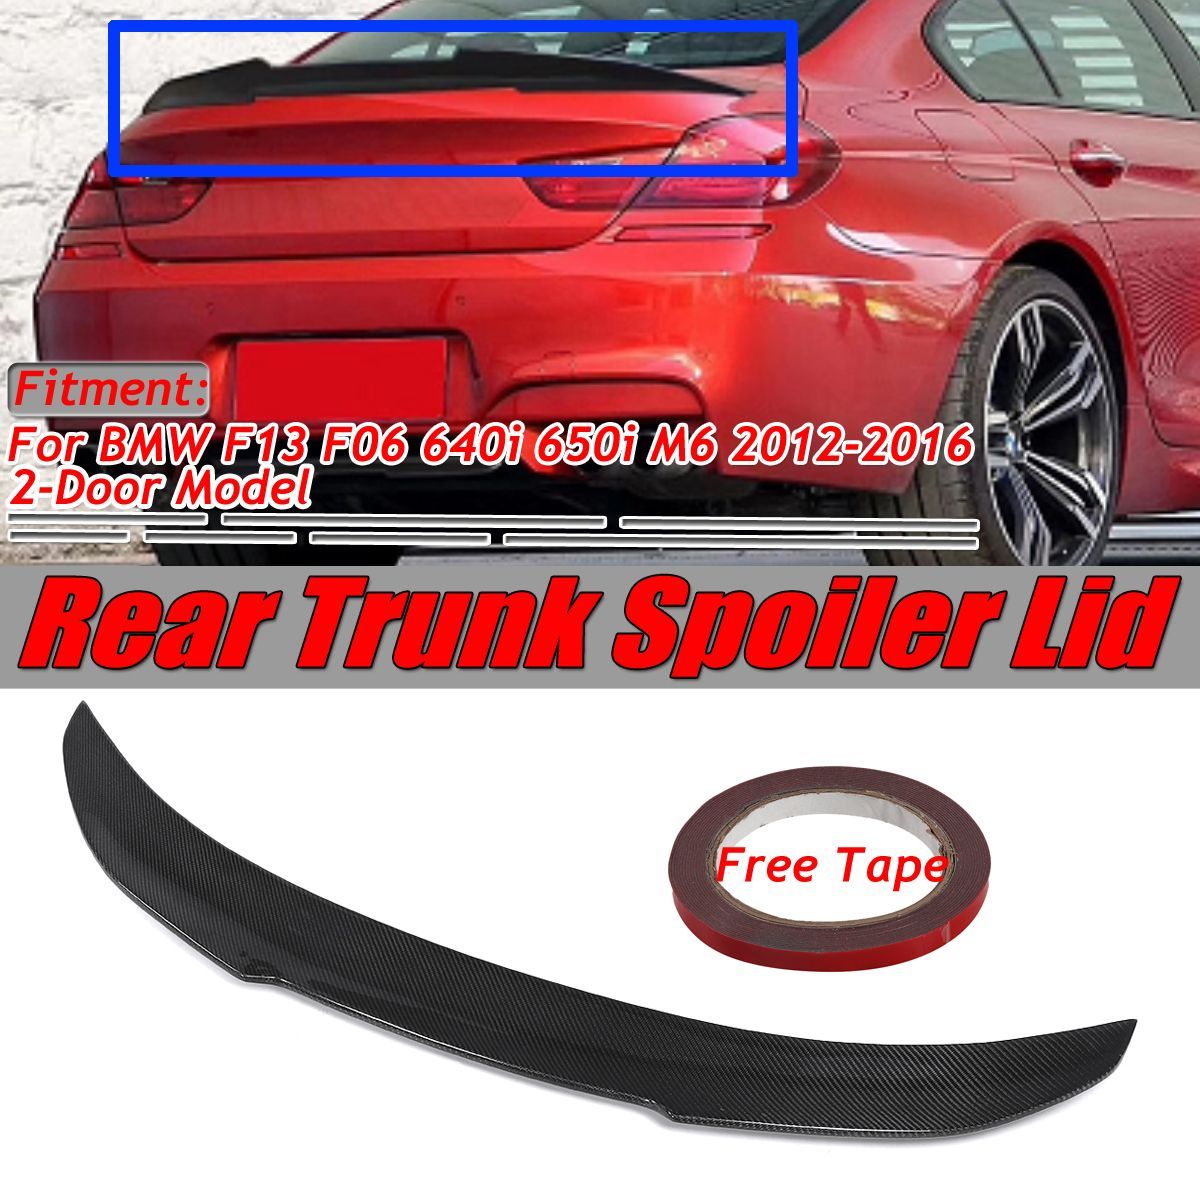 Real-Carbon-Fiber-Rear-Trunk-Spoiler-Lid-For-BMW-F13-F06-640i-650i-M6-2012-2016-1672581